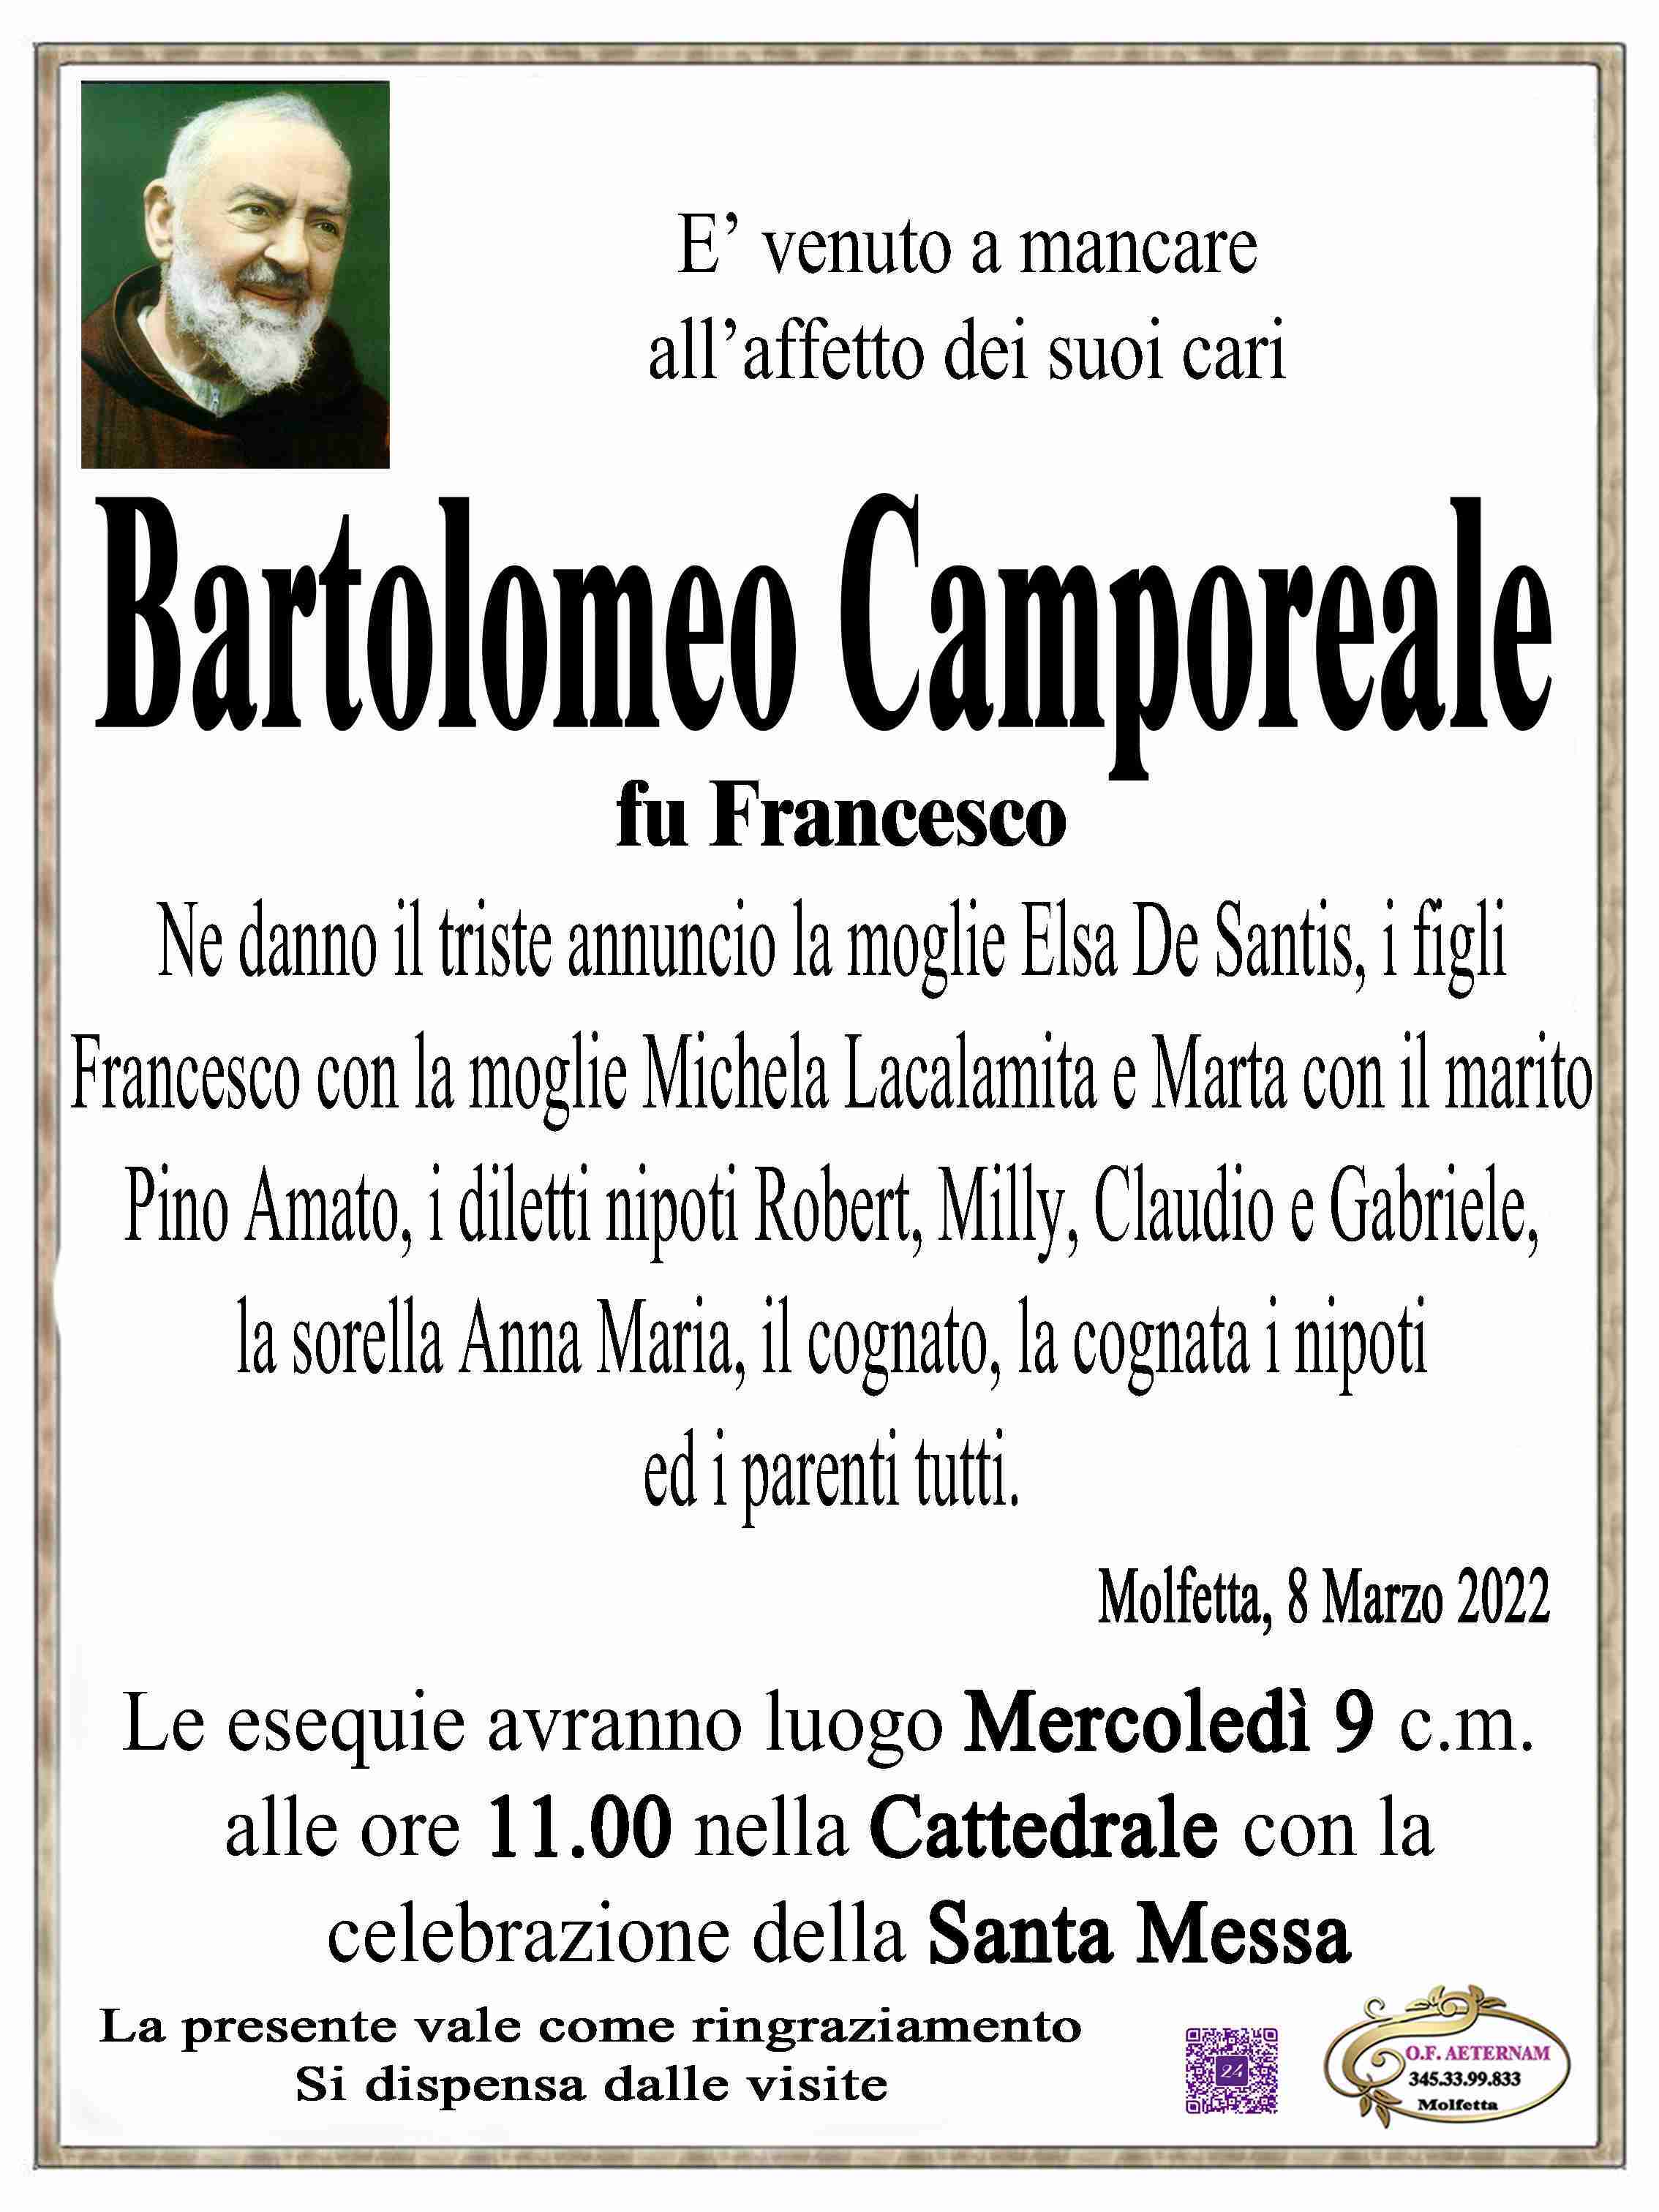 Bartolomeo Camporeale